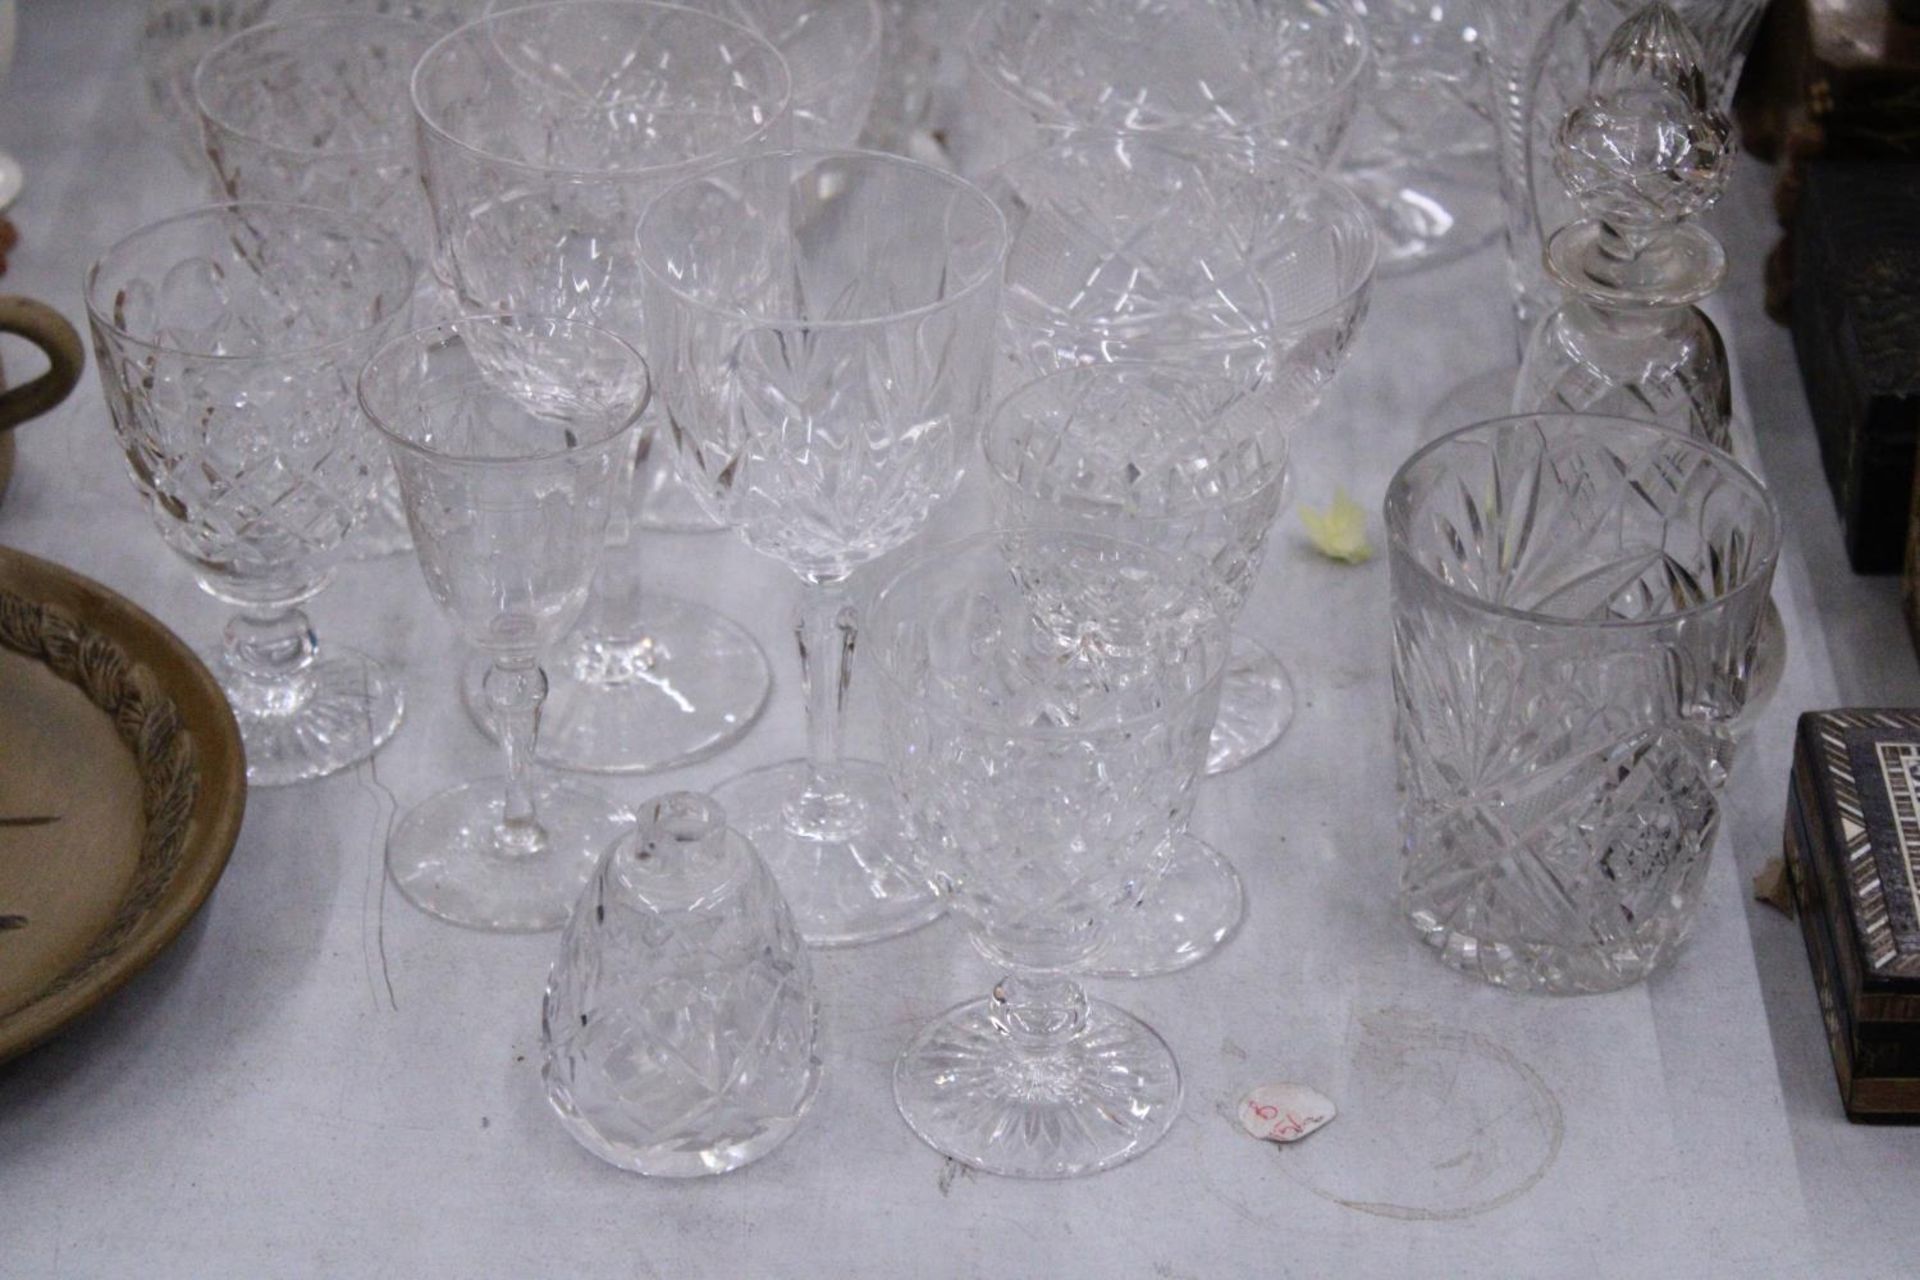 A LARGE QUANTITY OF GLASSWARE TO INCLUDE BOWLS, VASES, WINE GLASSES, ETC - Bild 2 aus 6